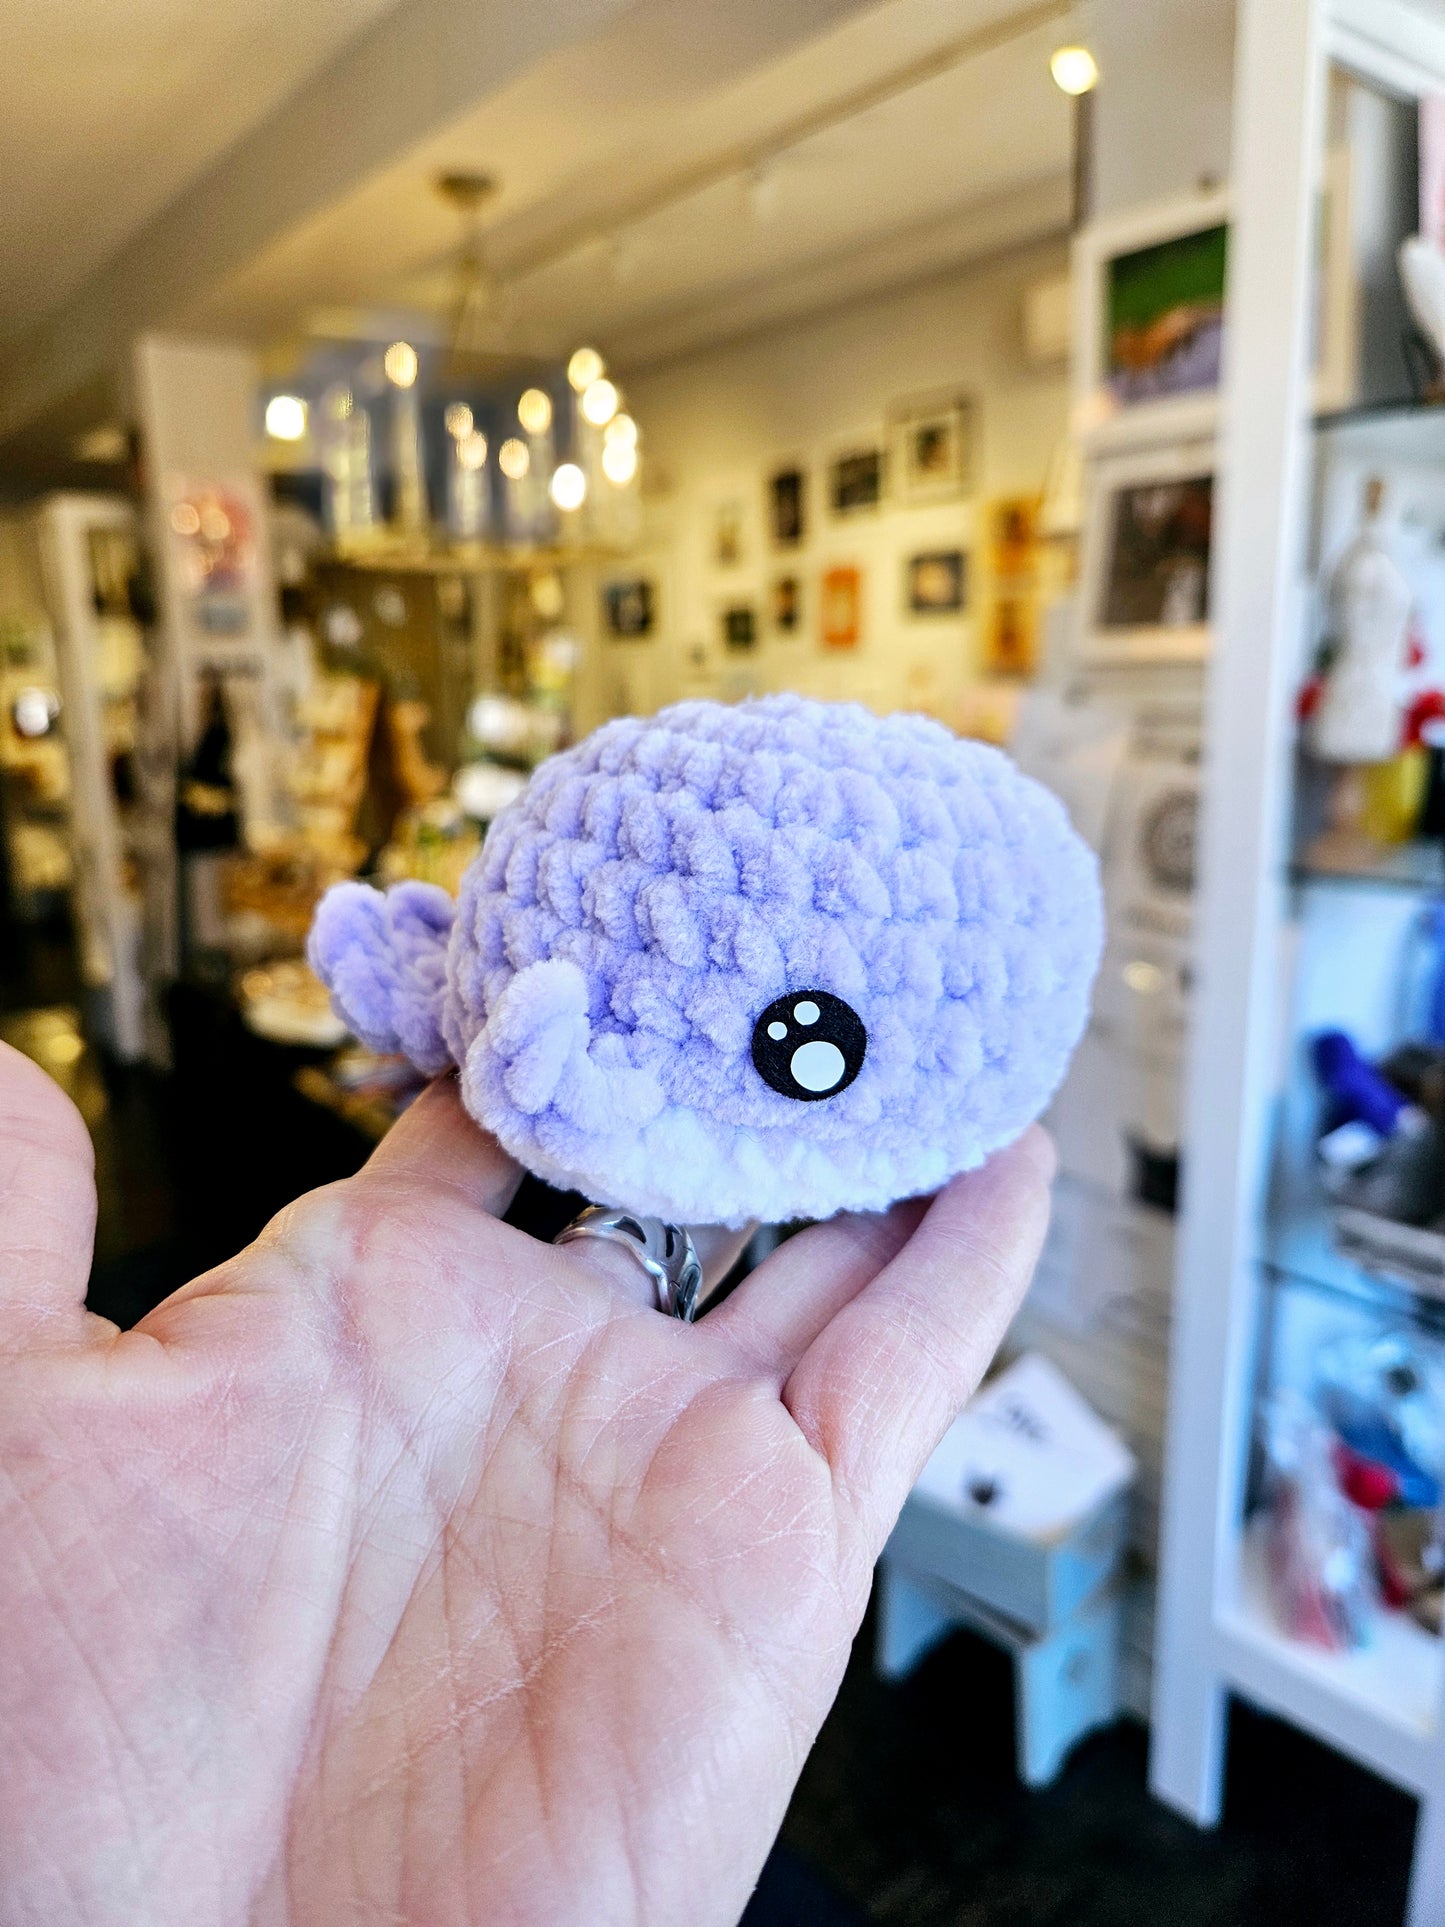 Mini Crochet Stuffies